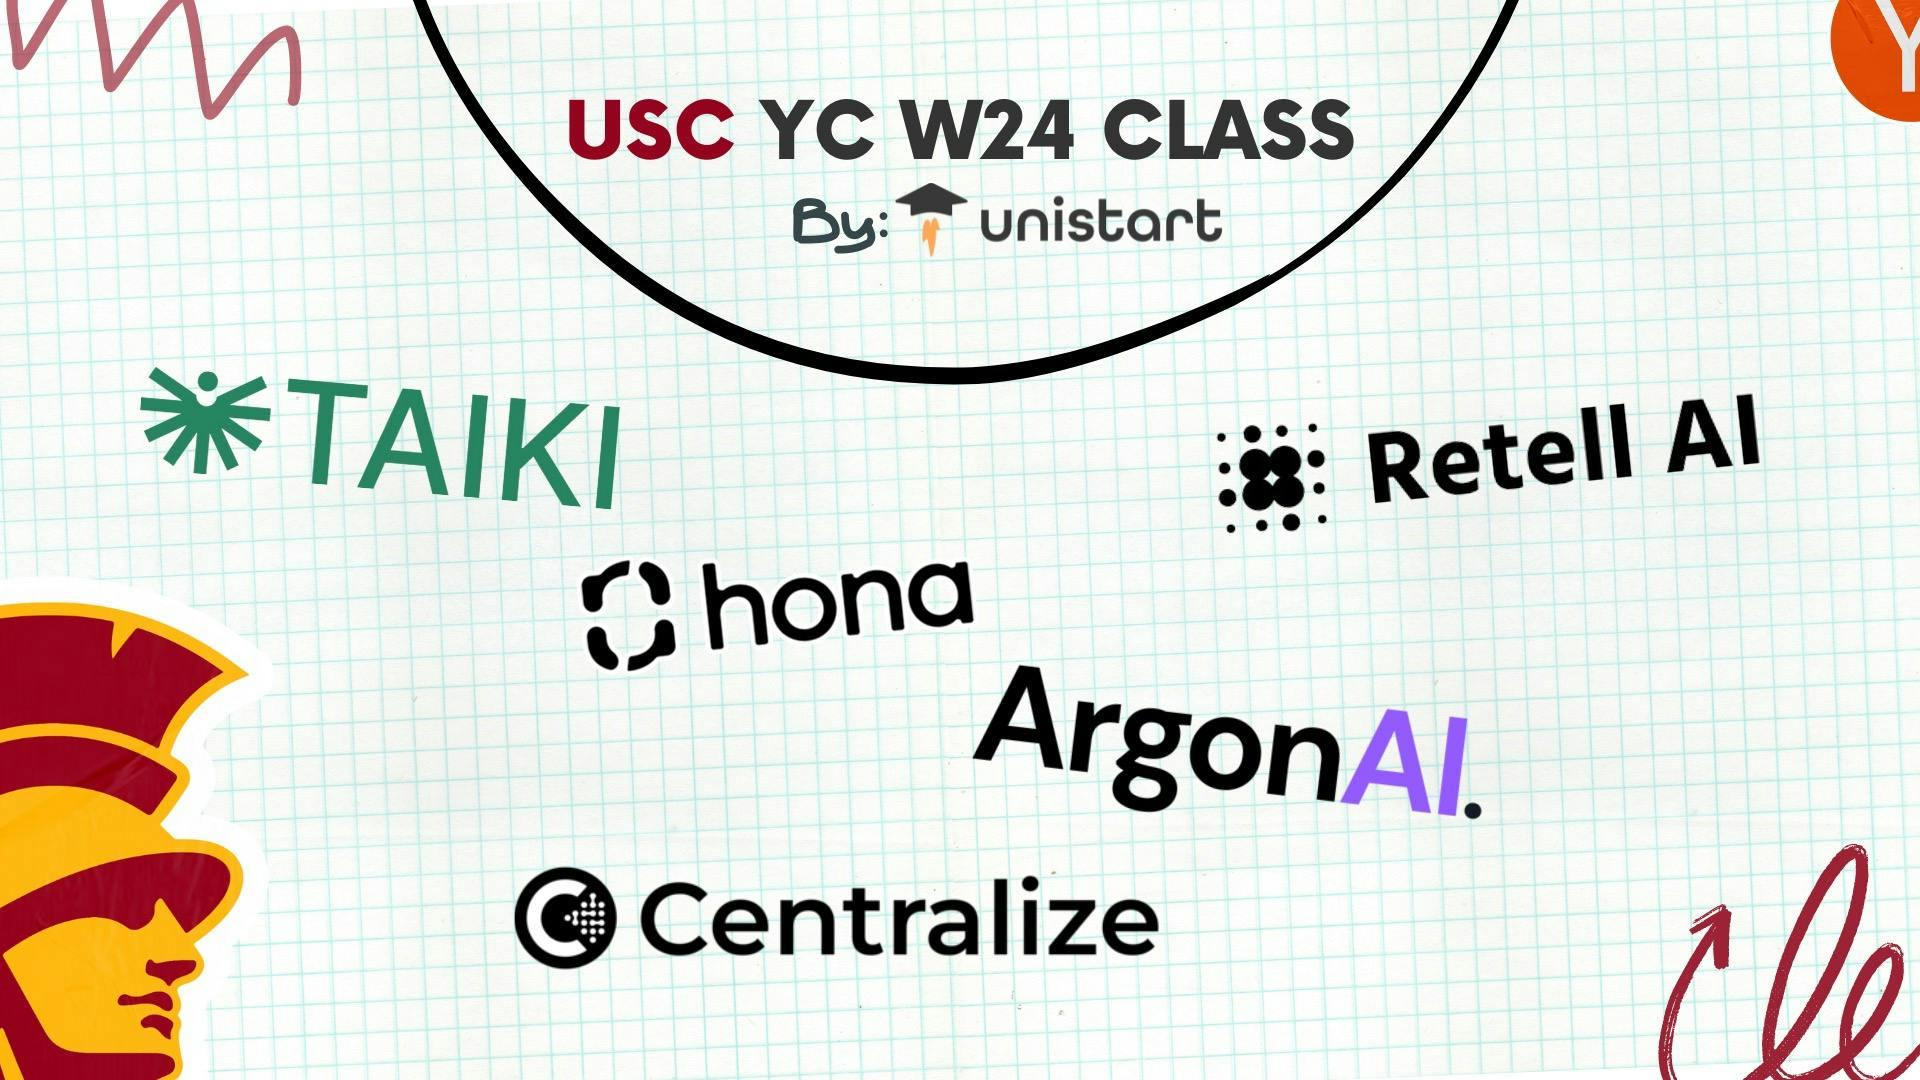 USC YC W24 Class Marketmap